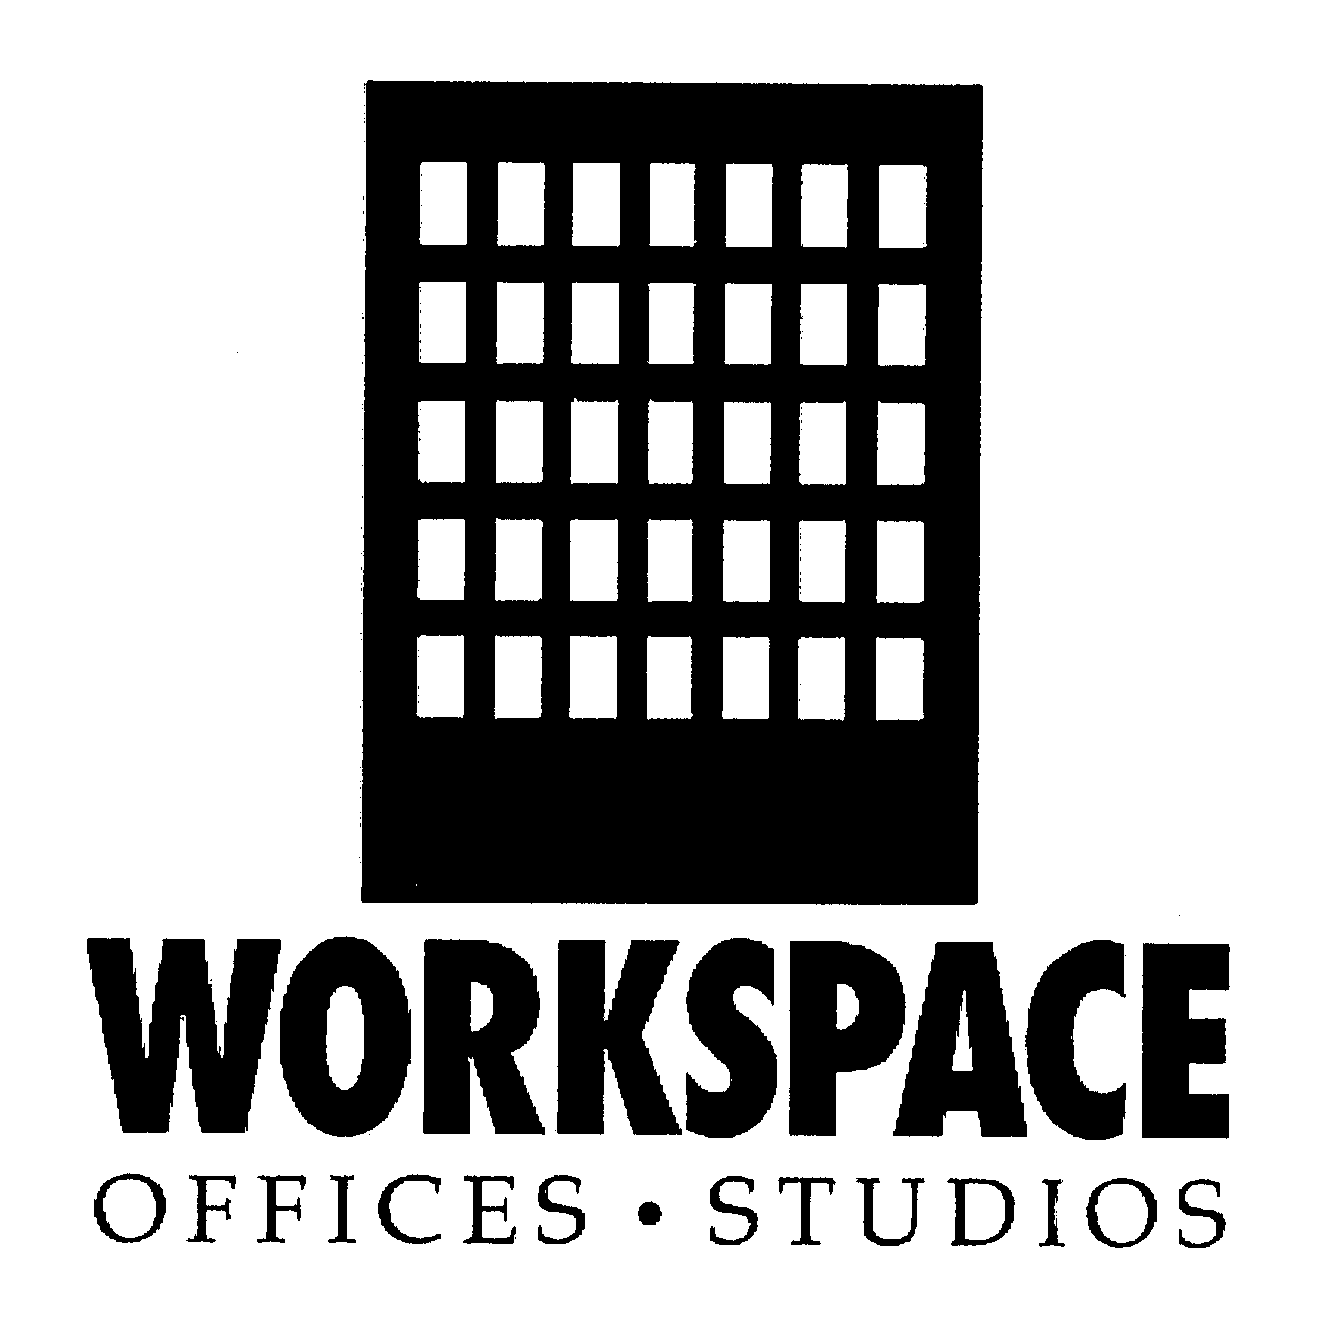  WORKSPACE OFFICES STUDIOS